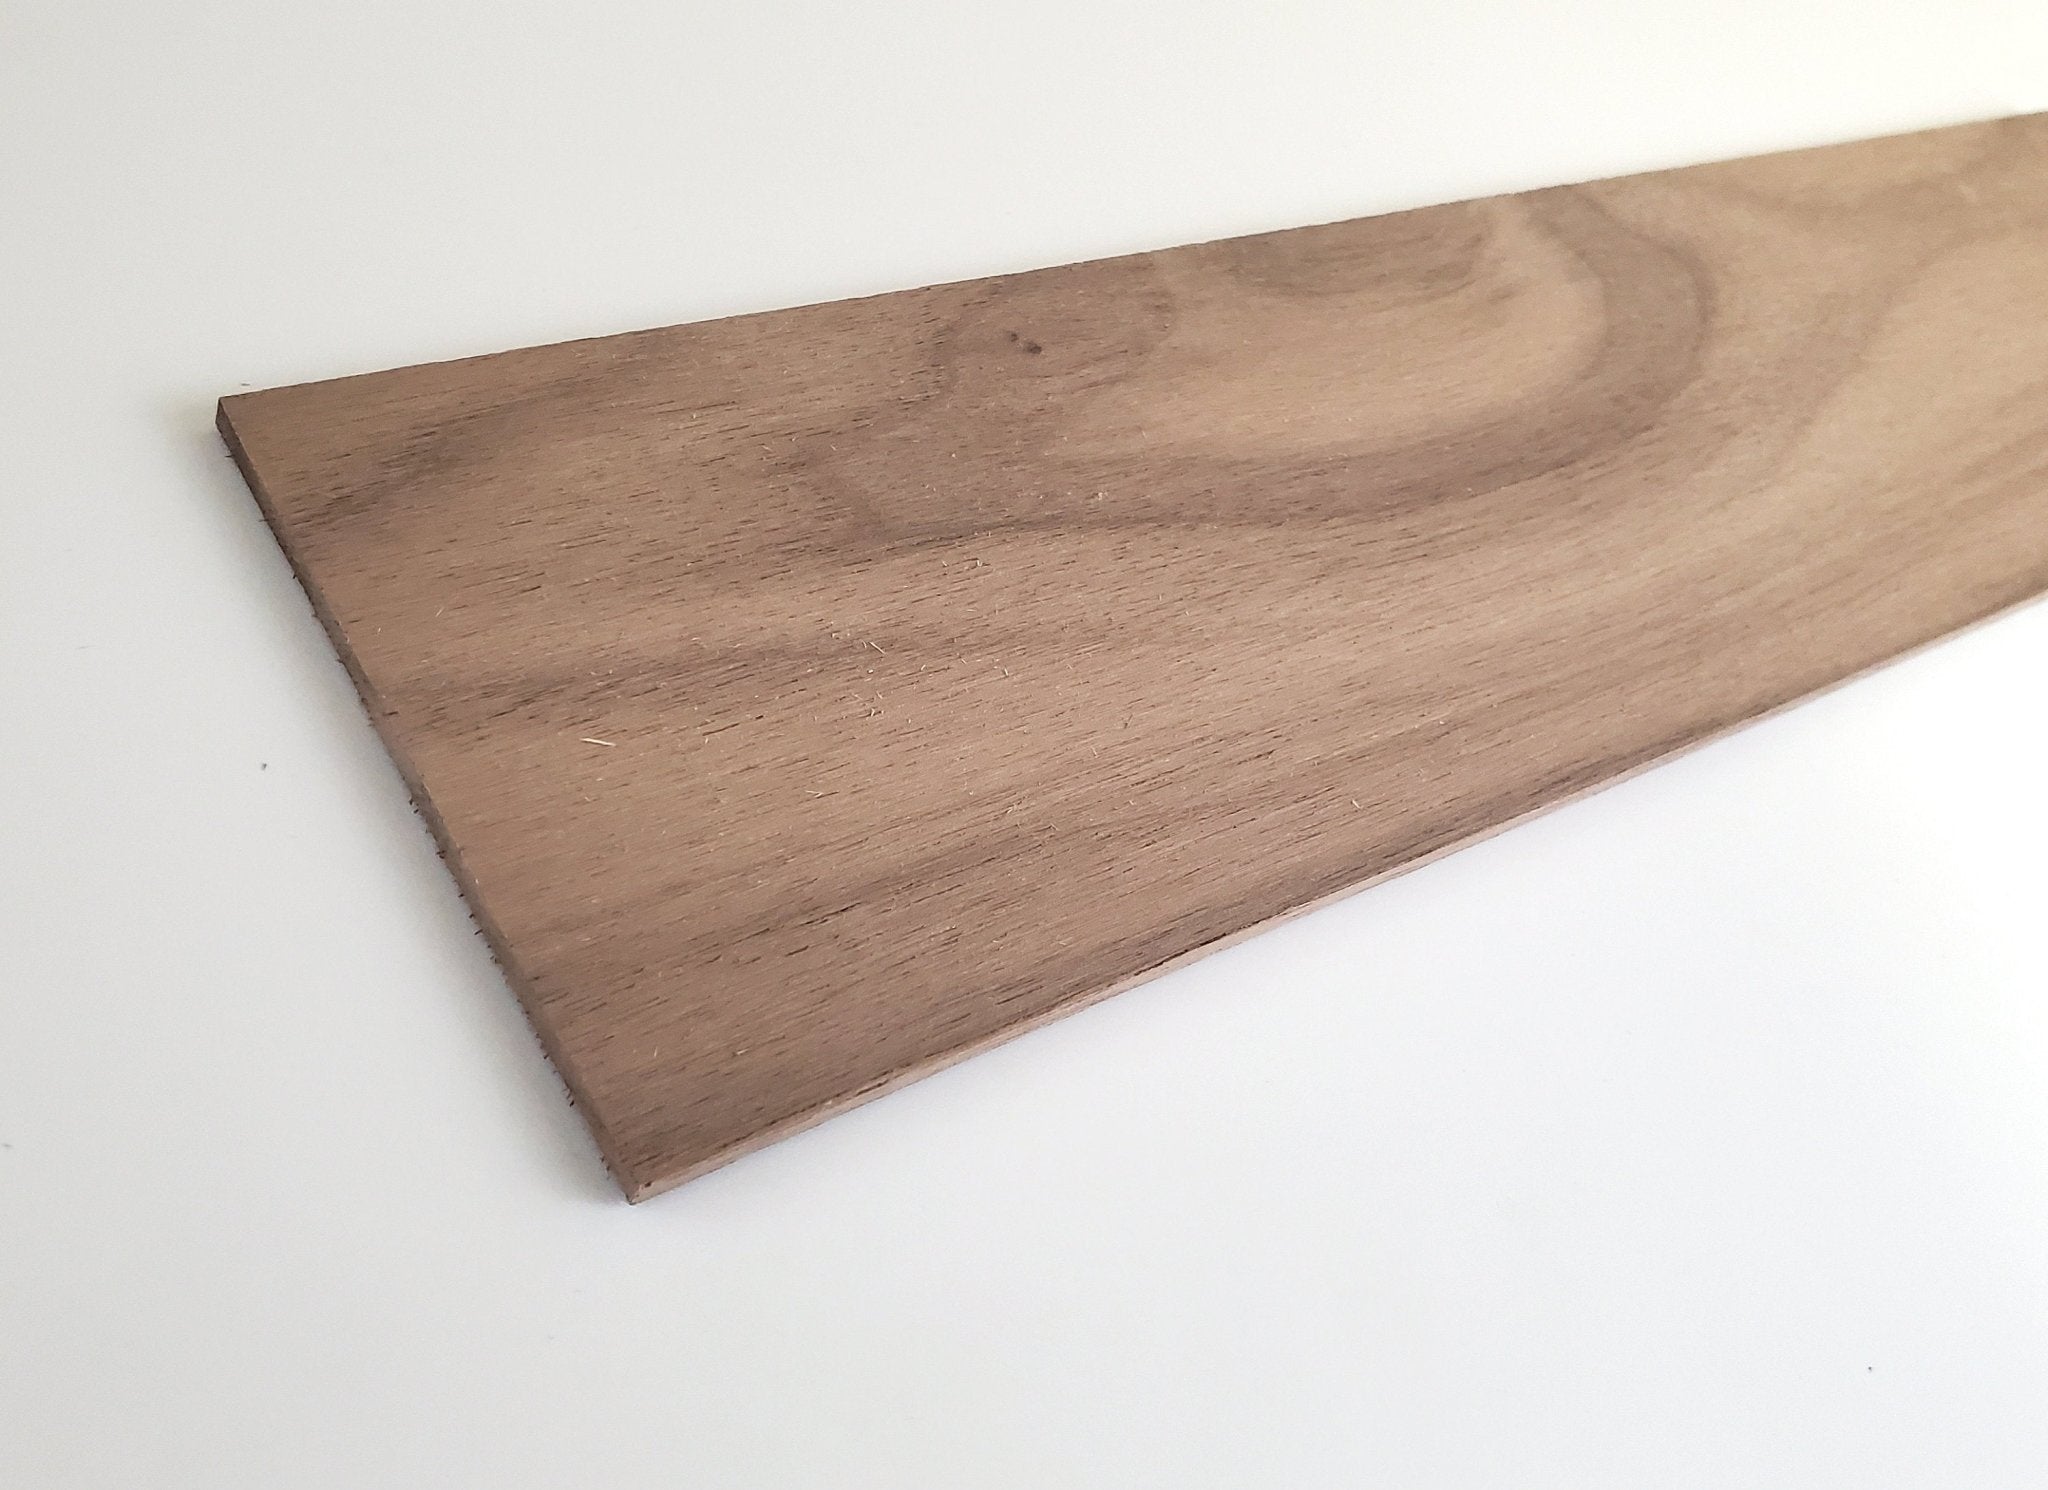 Walnut Wood Sheet Plank Thin 1/32 x 3 x 12 long Veneer